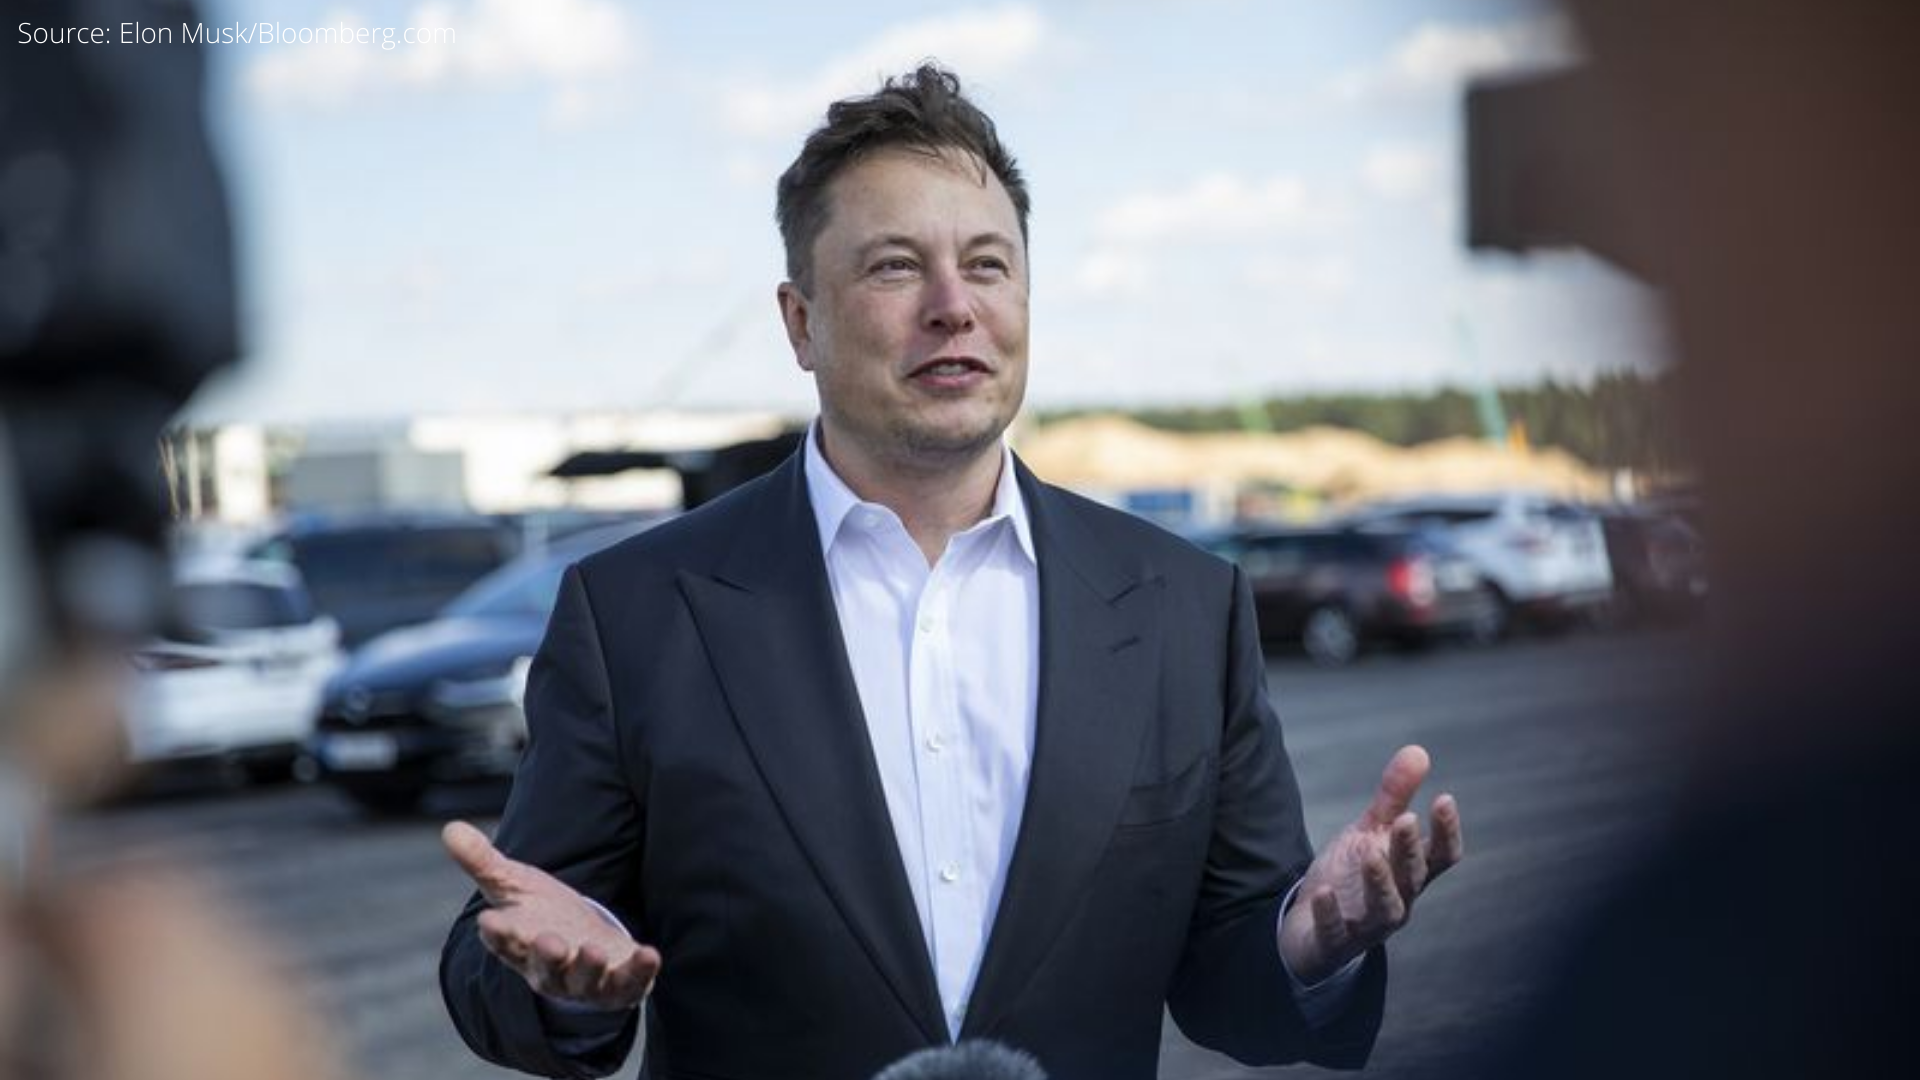 Elon Musk Surpasses Jeff Bezos as the Richest Man in the World